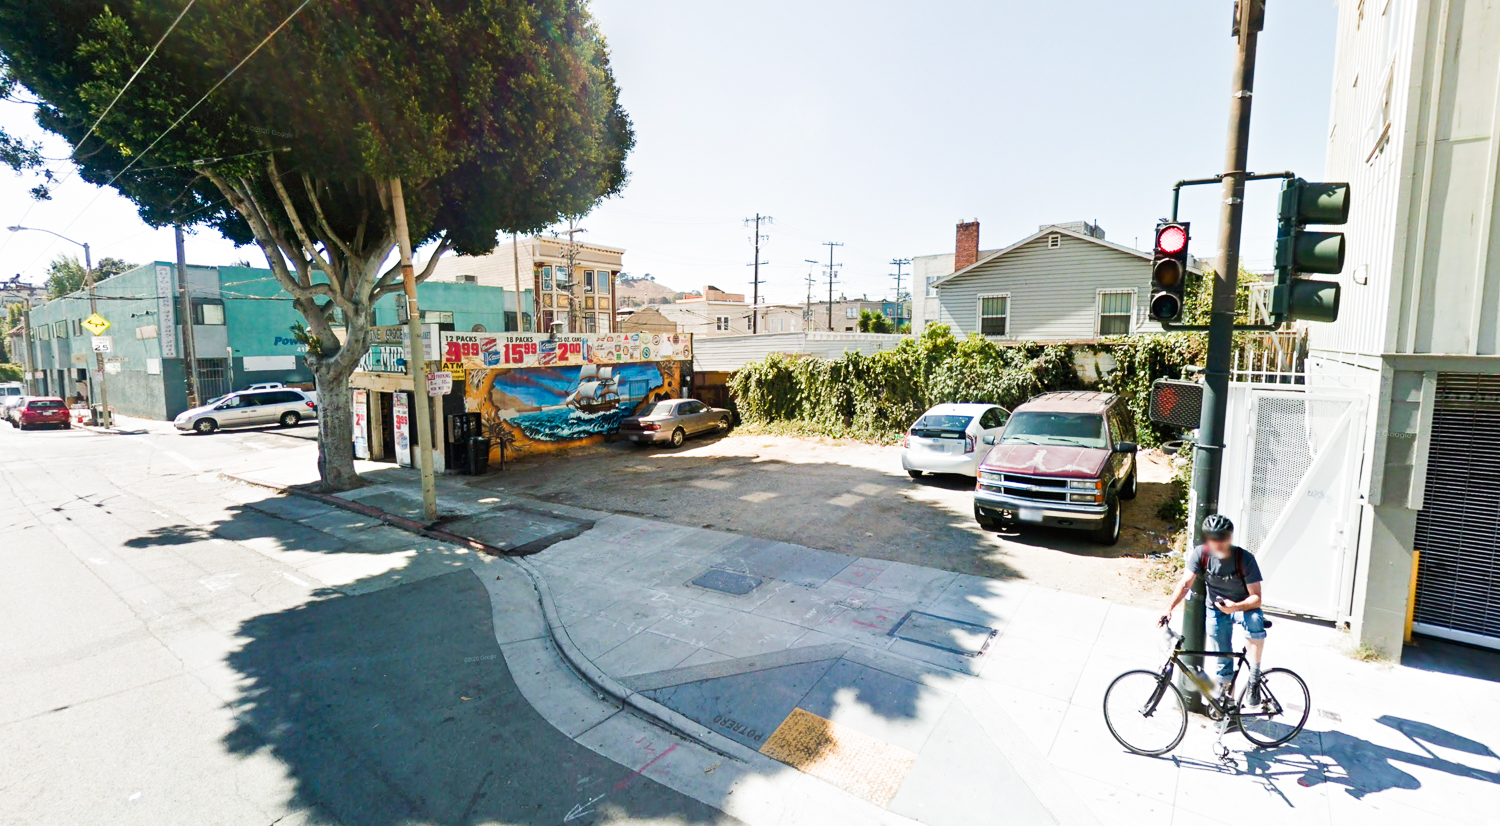 1298 Potrero Avenue, image via Google Street View